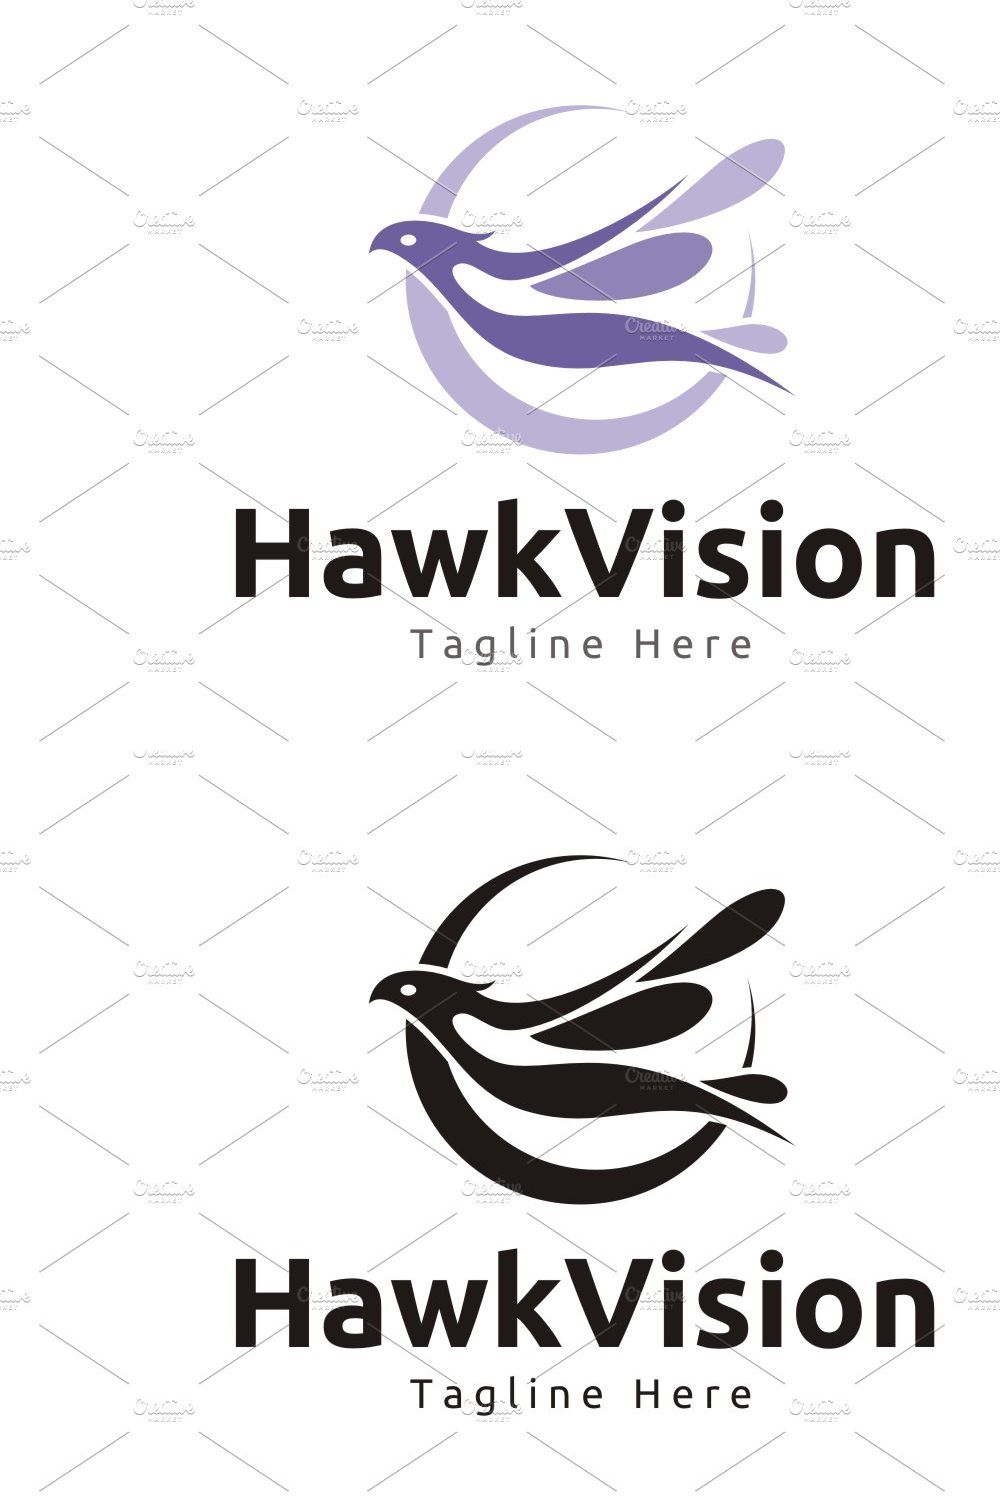 Hawk Vision Logo pinterest preview image.